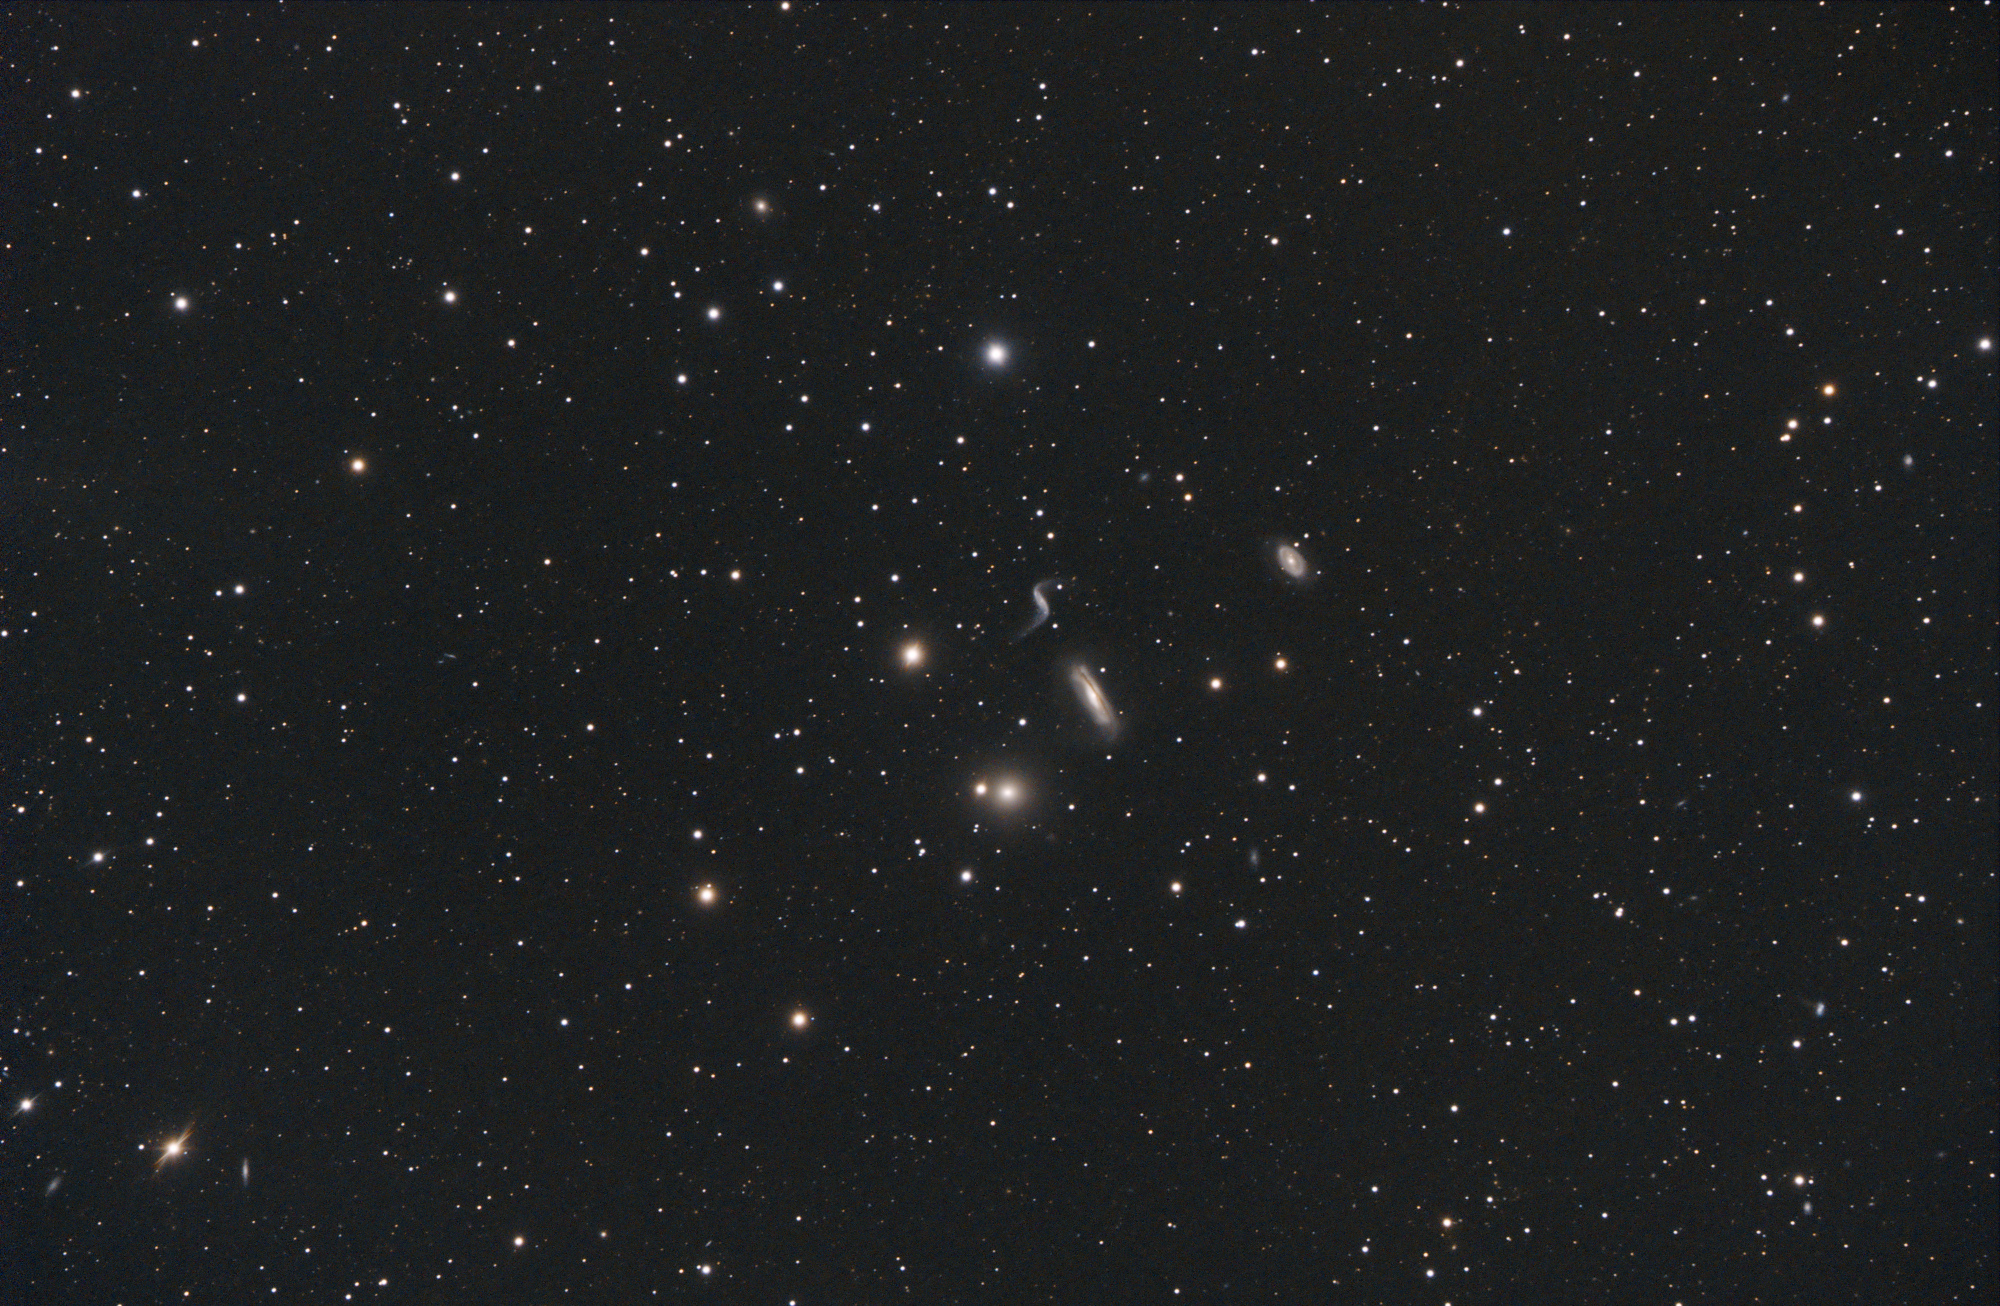 NGC3190_SIRIL-1-iris-1-cs5-3-FINAL-2-x.jpg